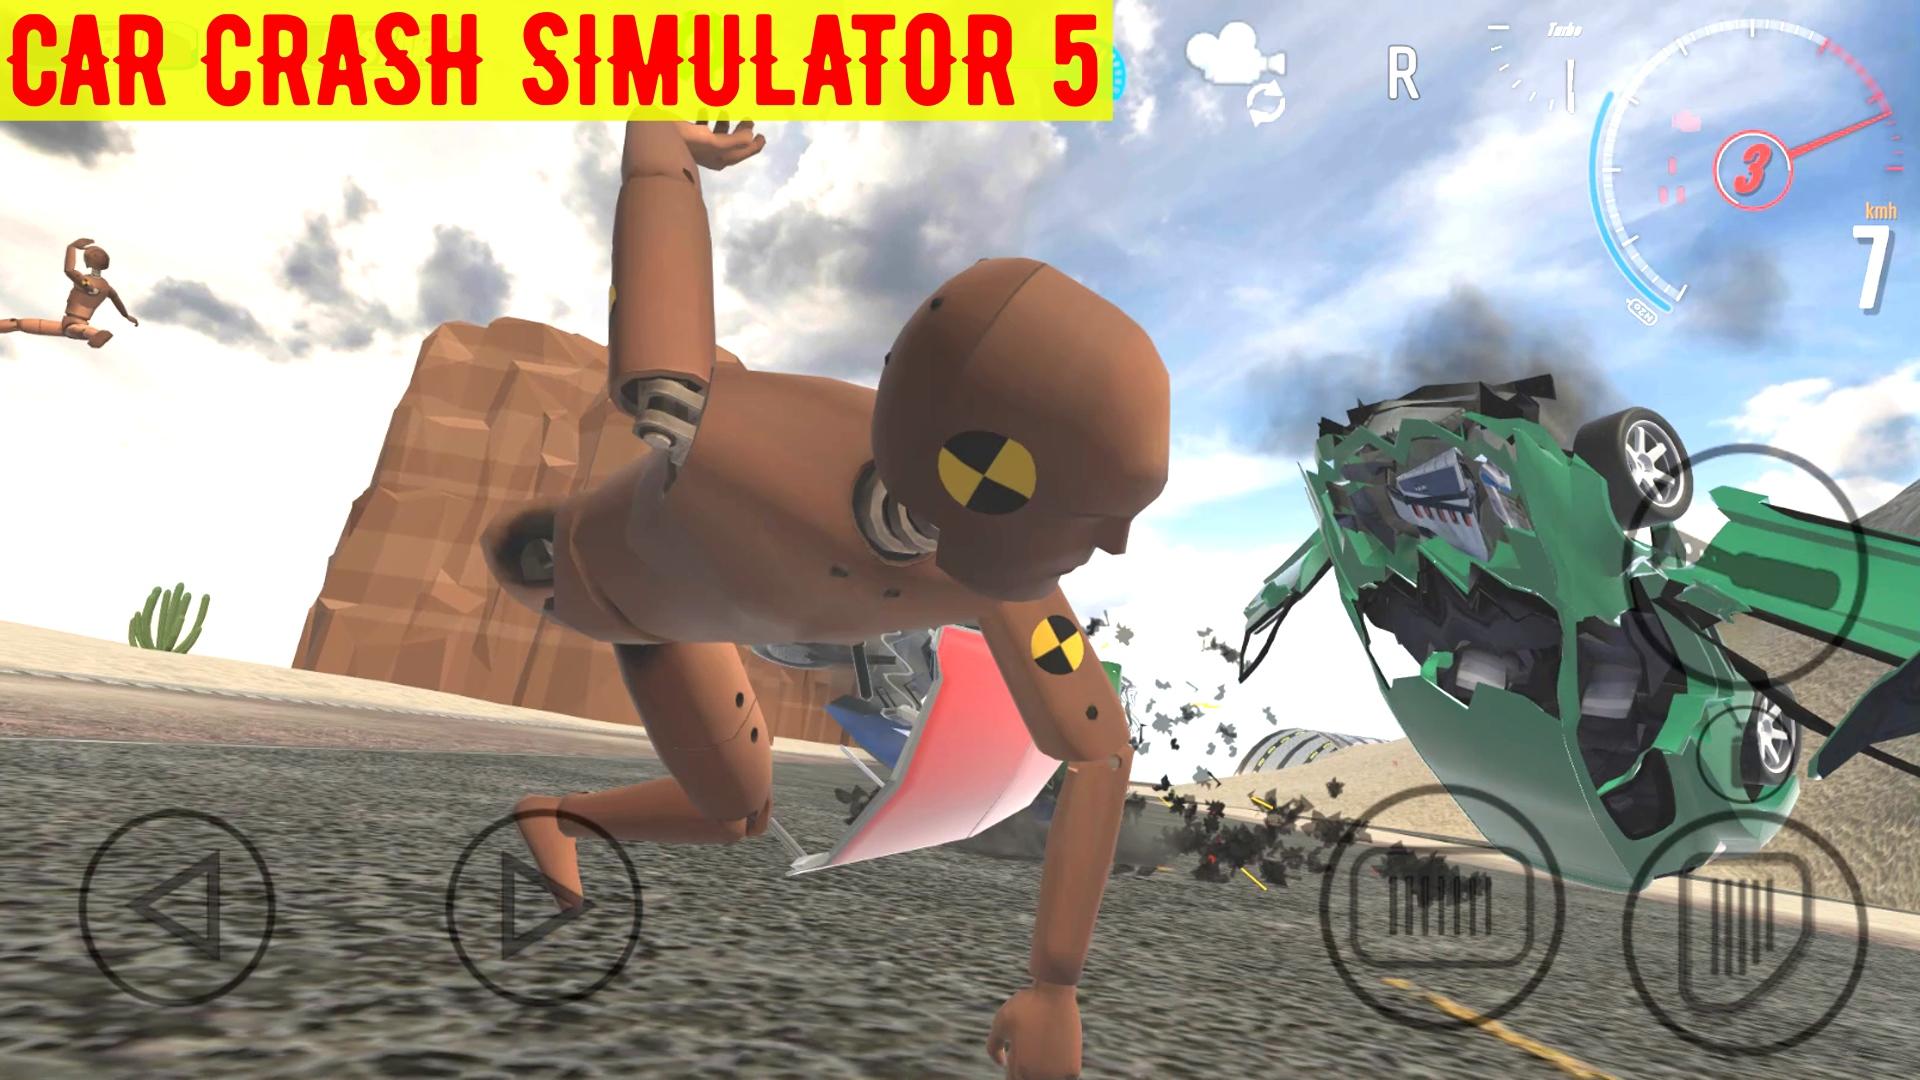 Screenshot 1 of Simulateur d'accident de voiture 5 5